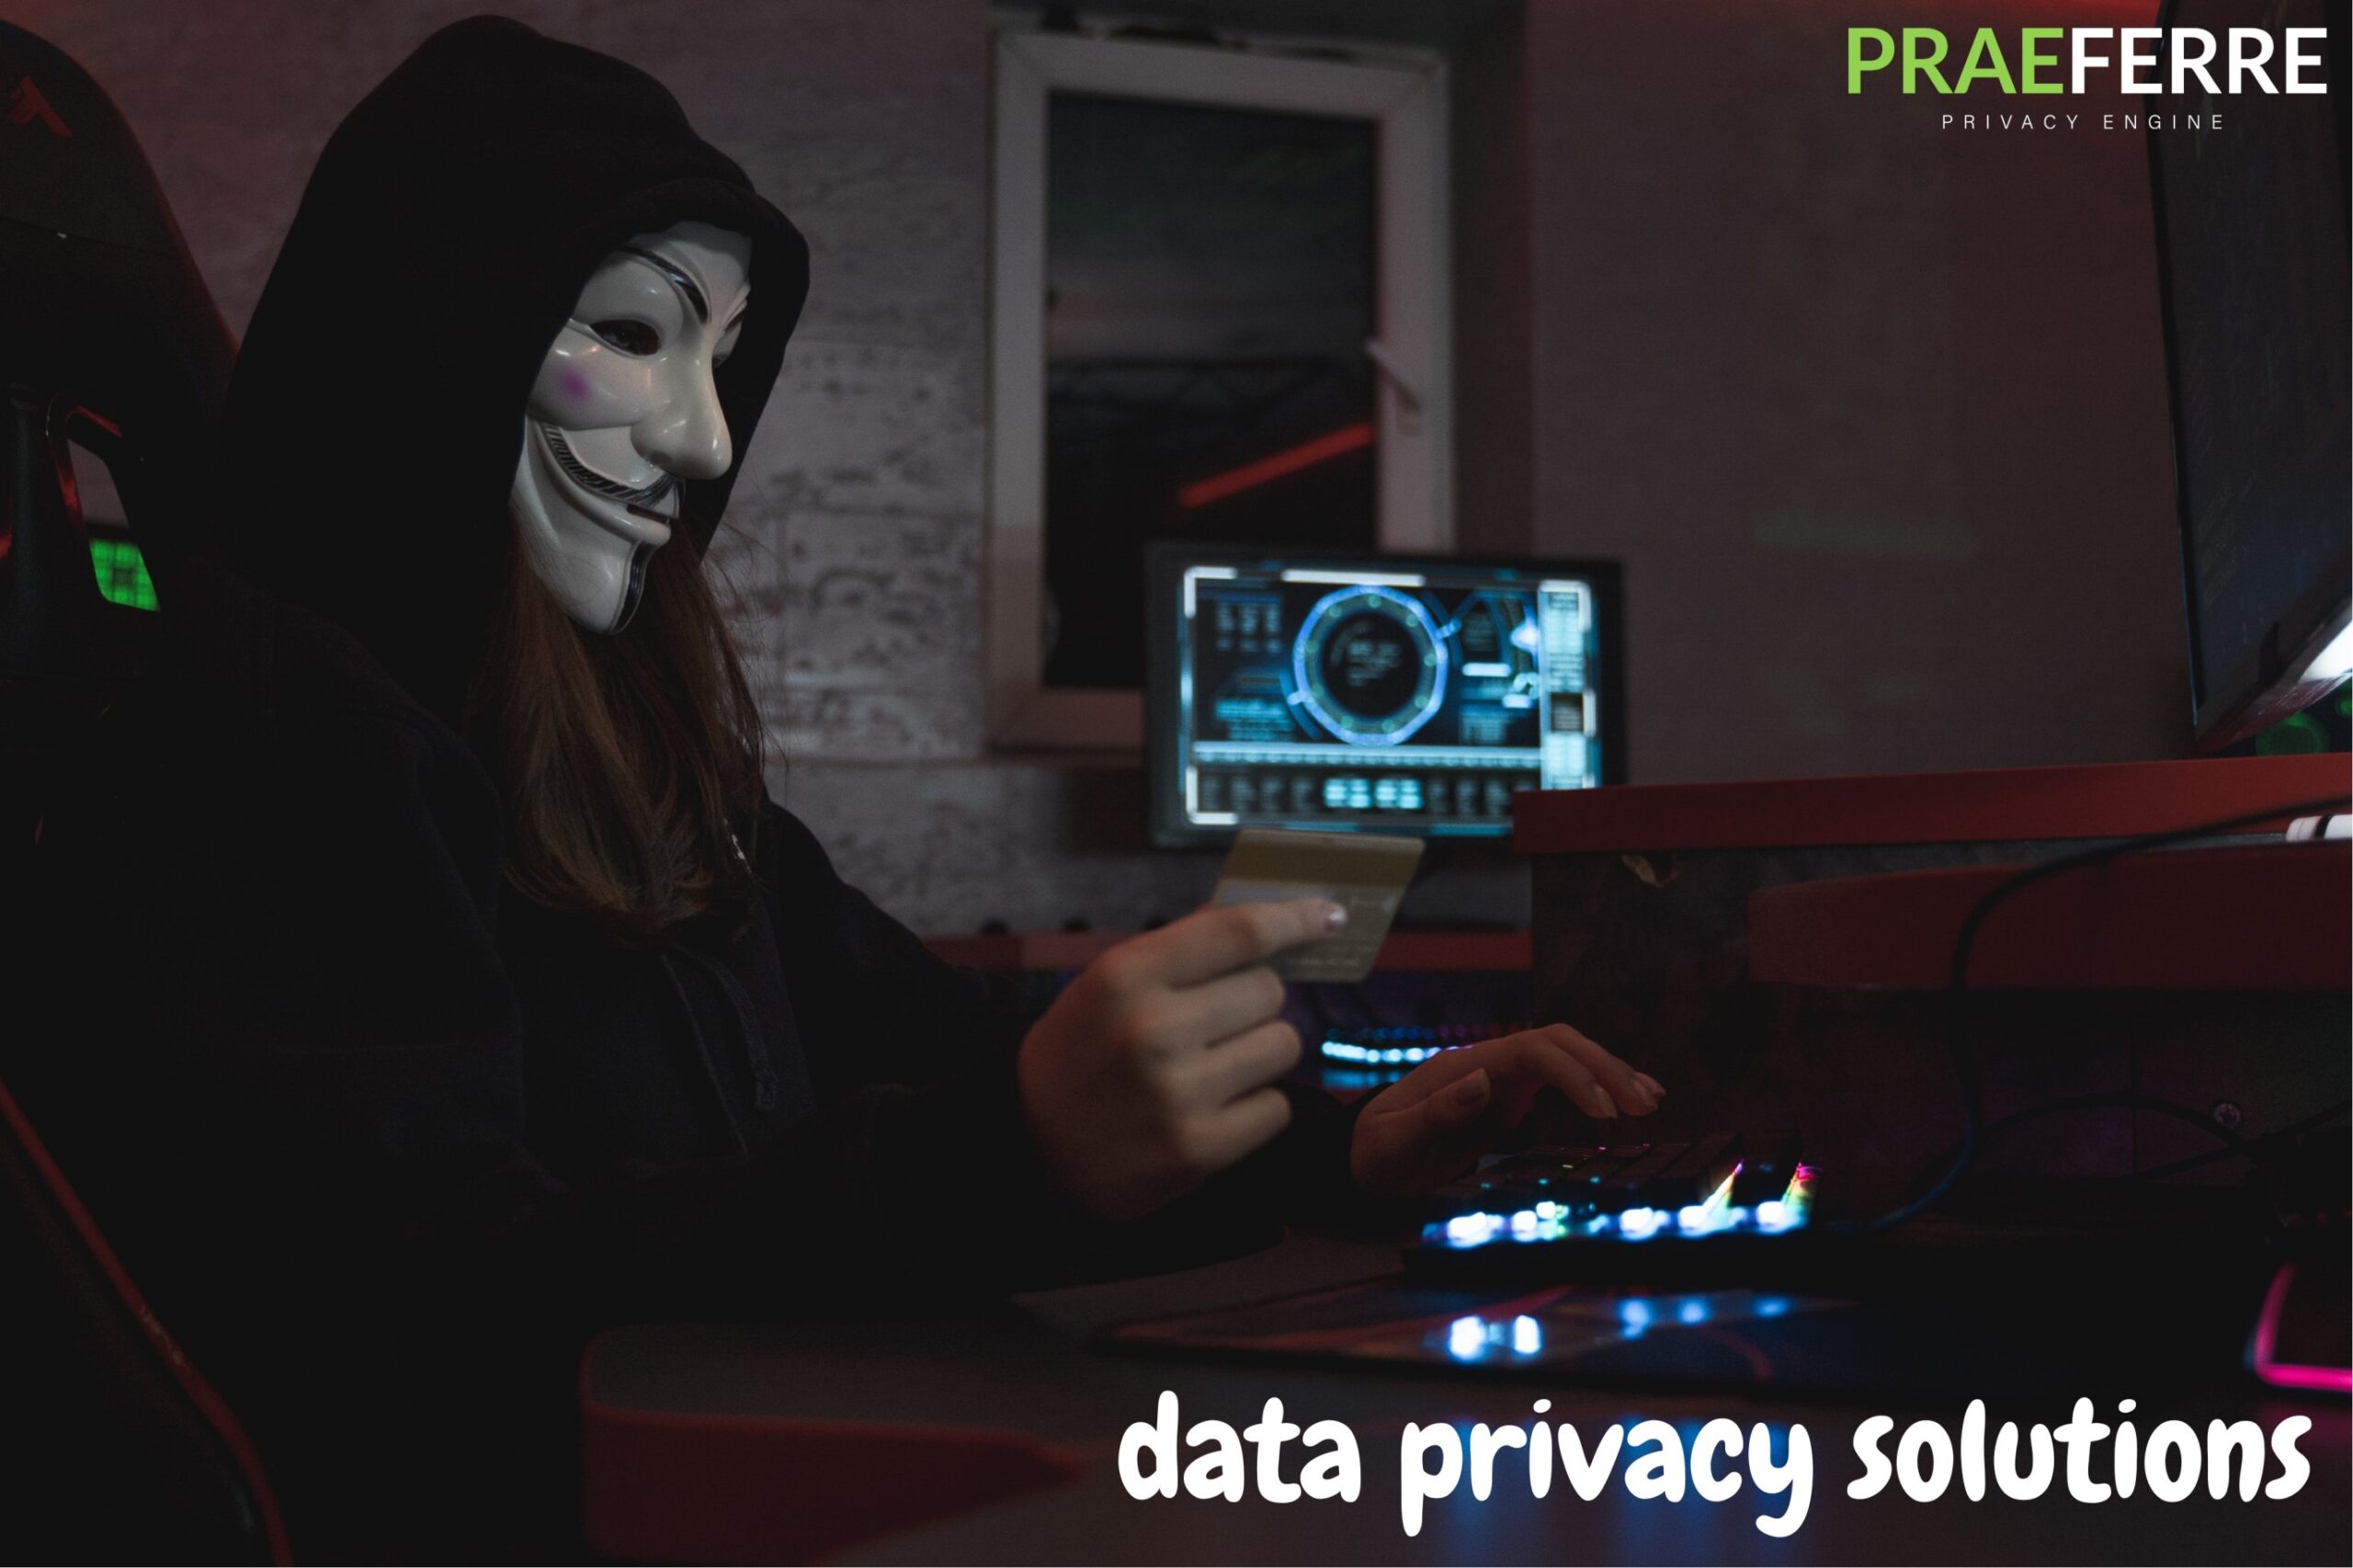 Praeferre data privacy solutions